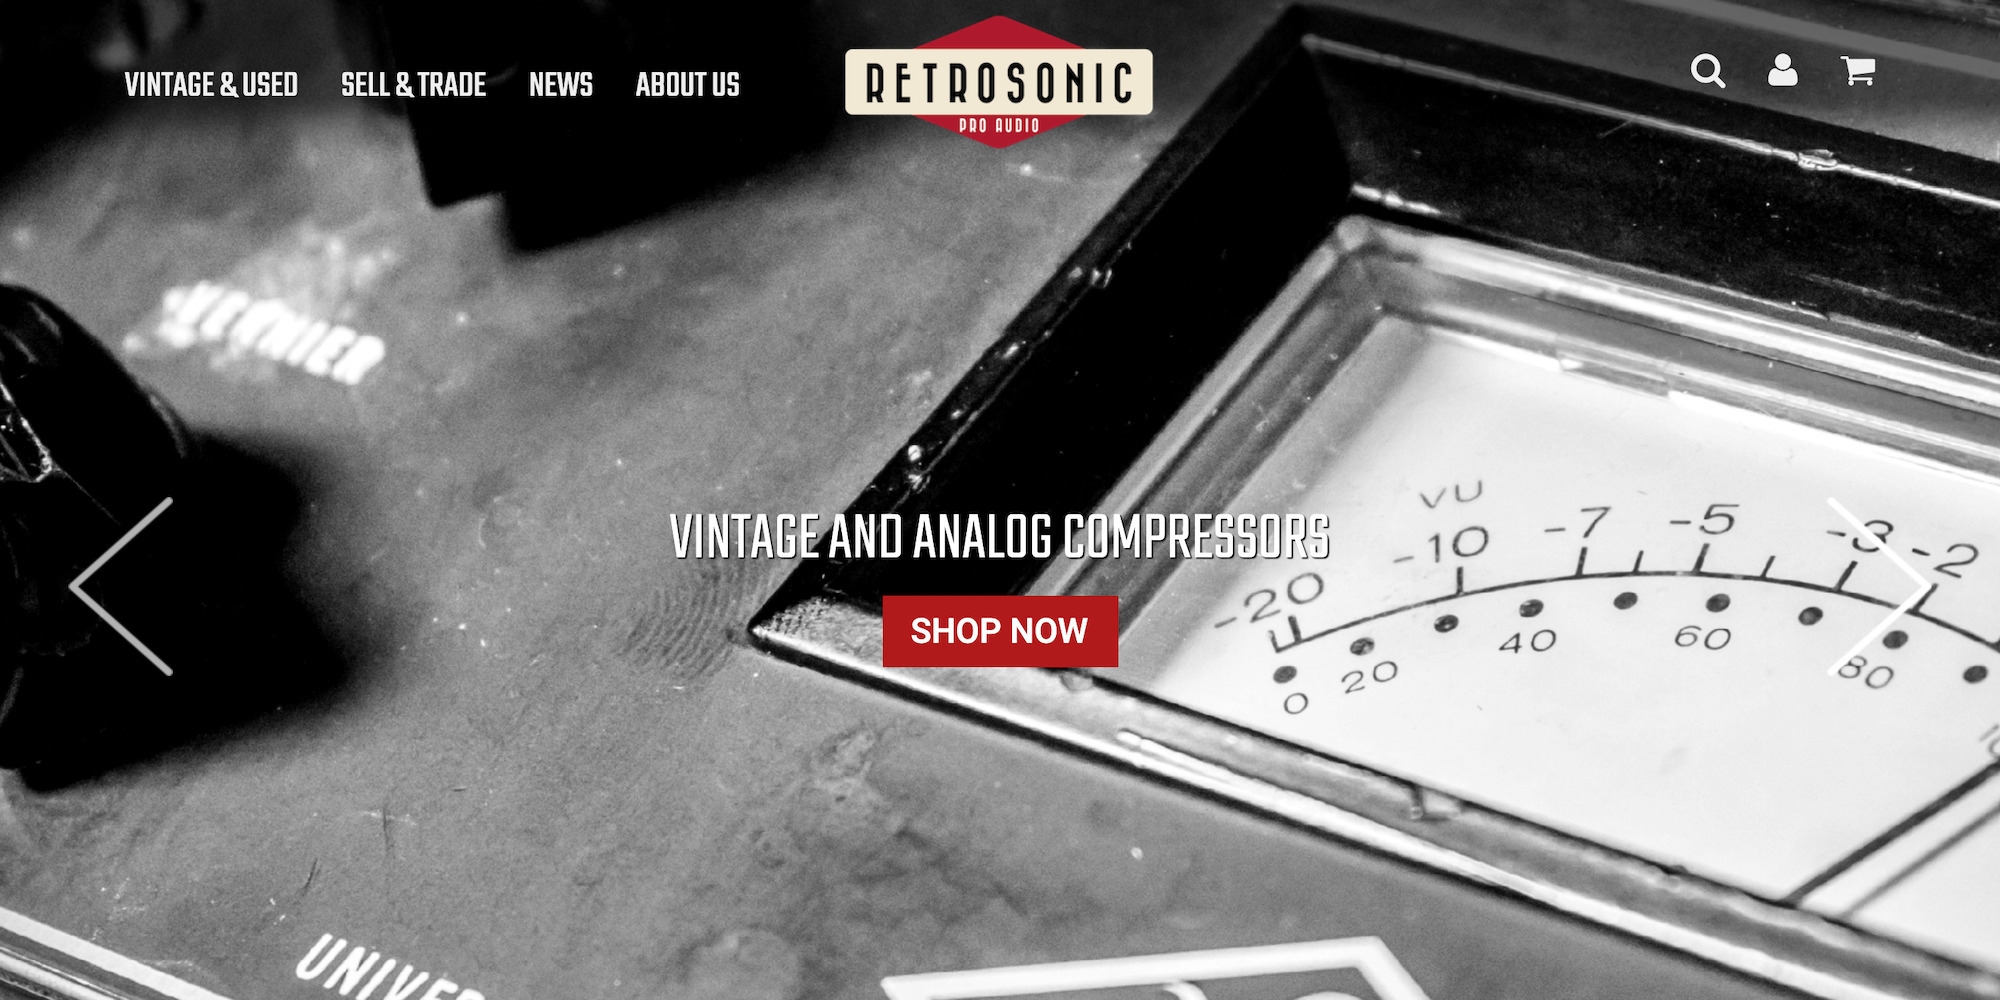 Retrosonic Pro Audio webstore is now open for business!